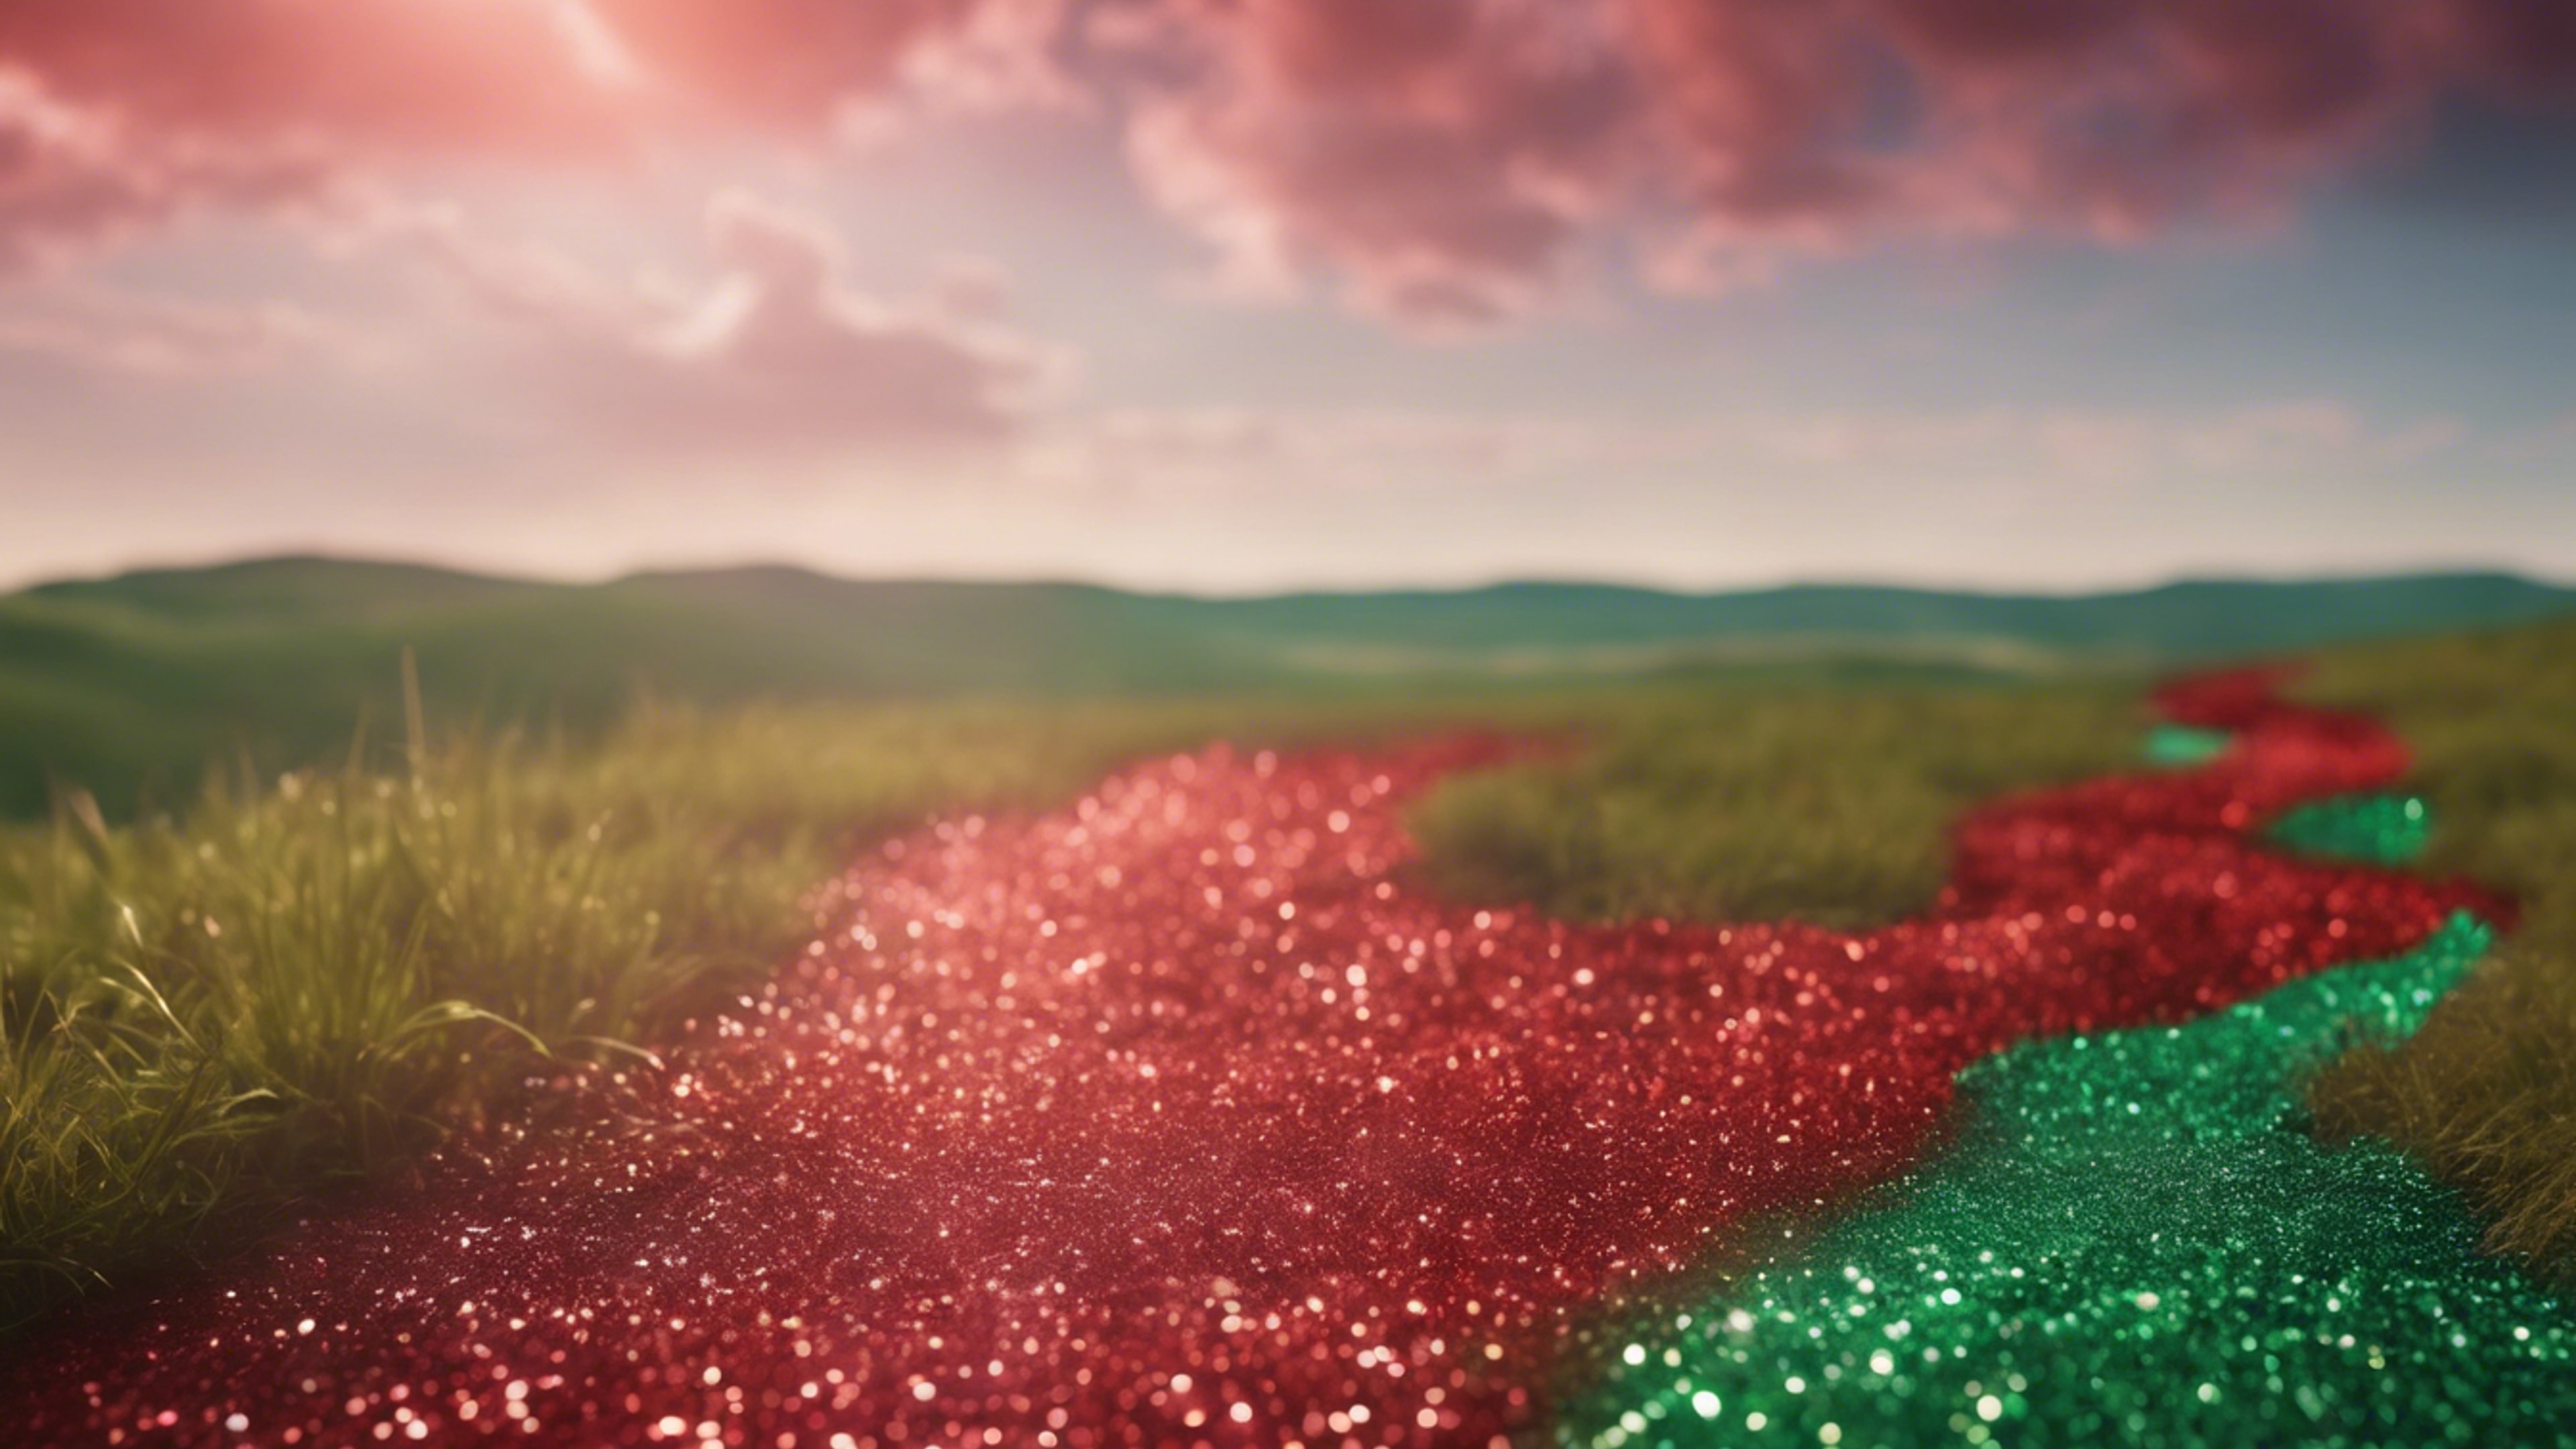 Path of shiny green and red glitter towards the horizon Tapet[4b670e6c3f1f43adb6d1]